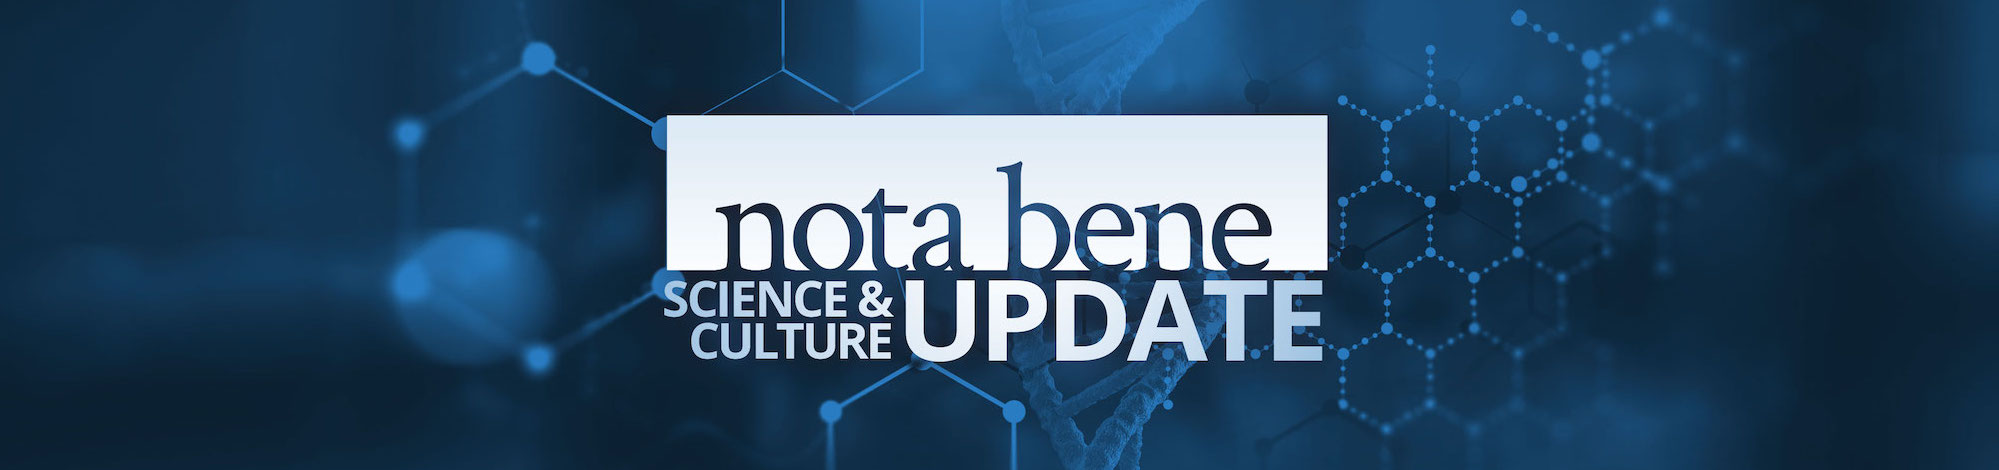 Nota Bene Science & Culture Update Header Image